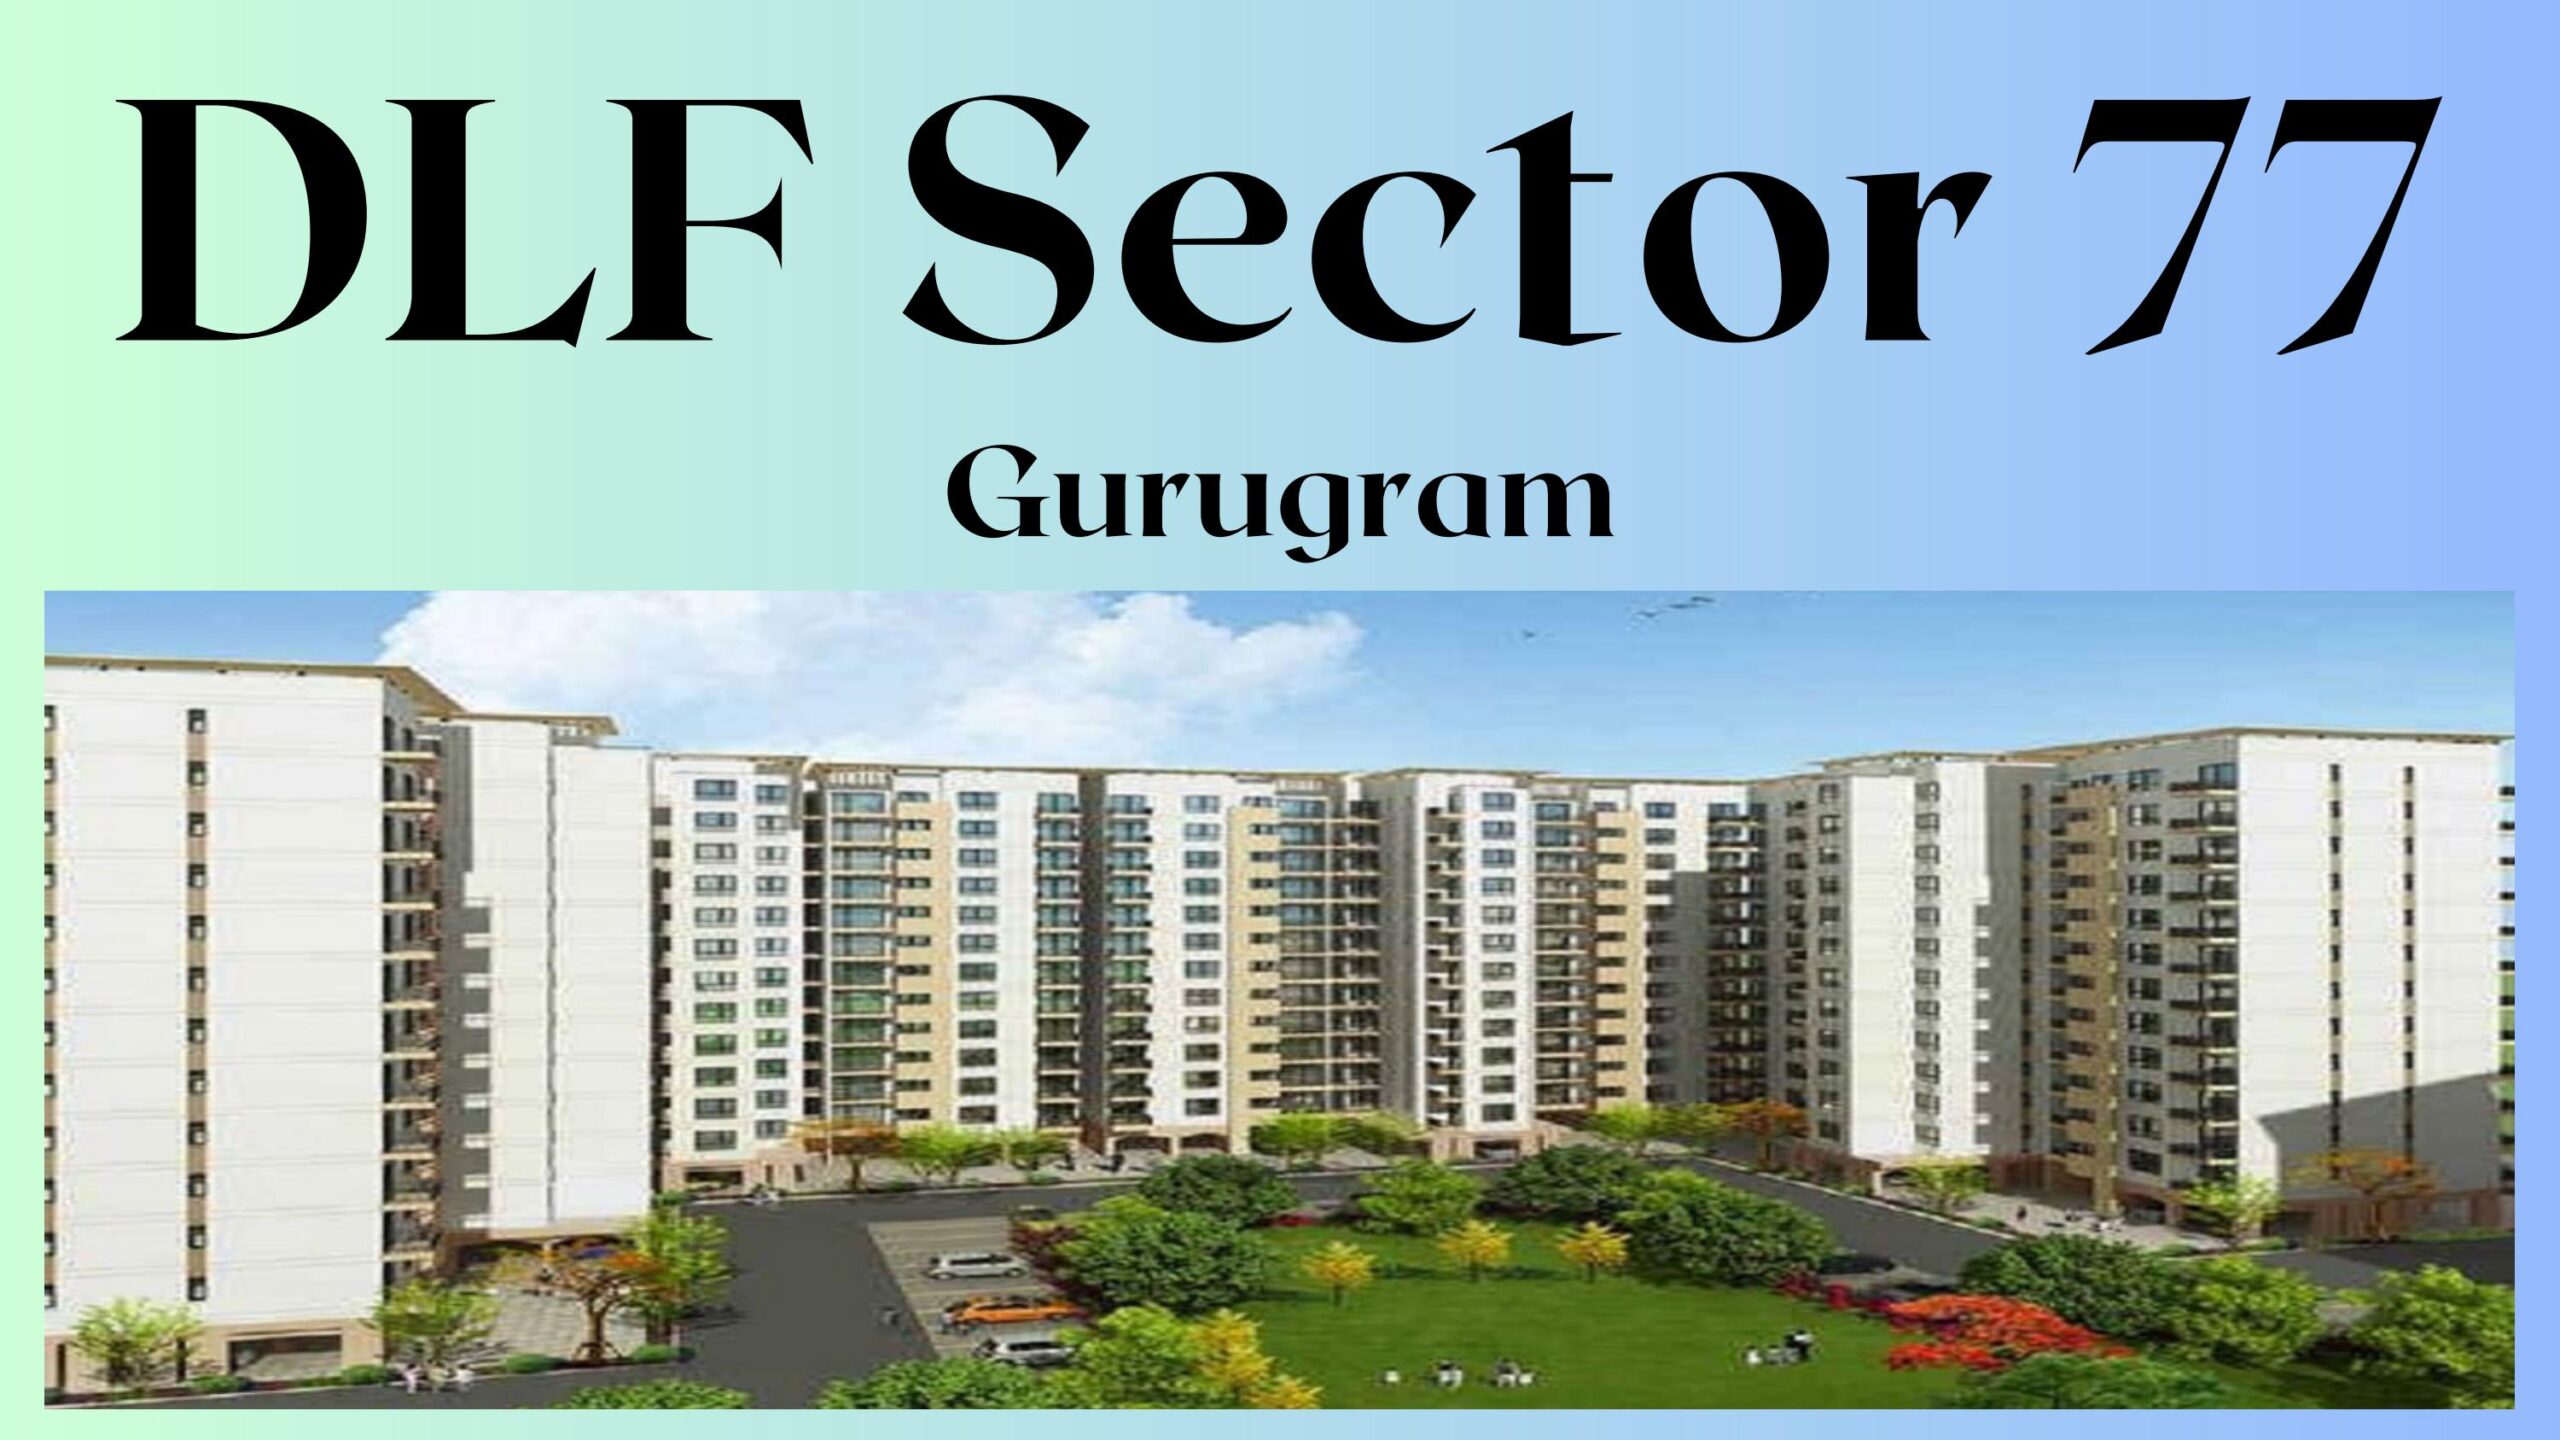 DLF Sector 77 Gurgaon – Housing Development In Gurugram